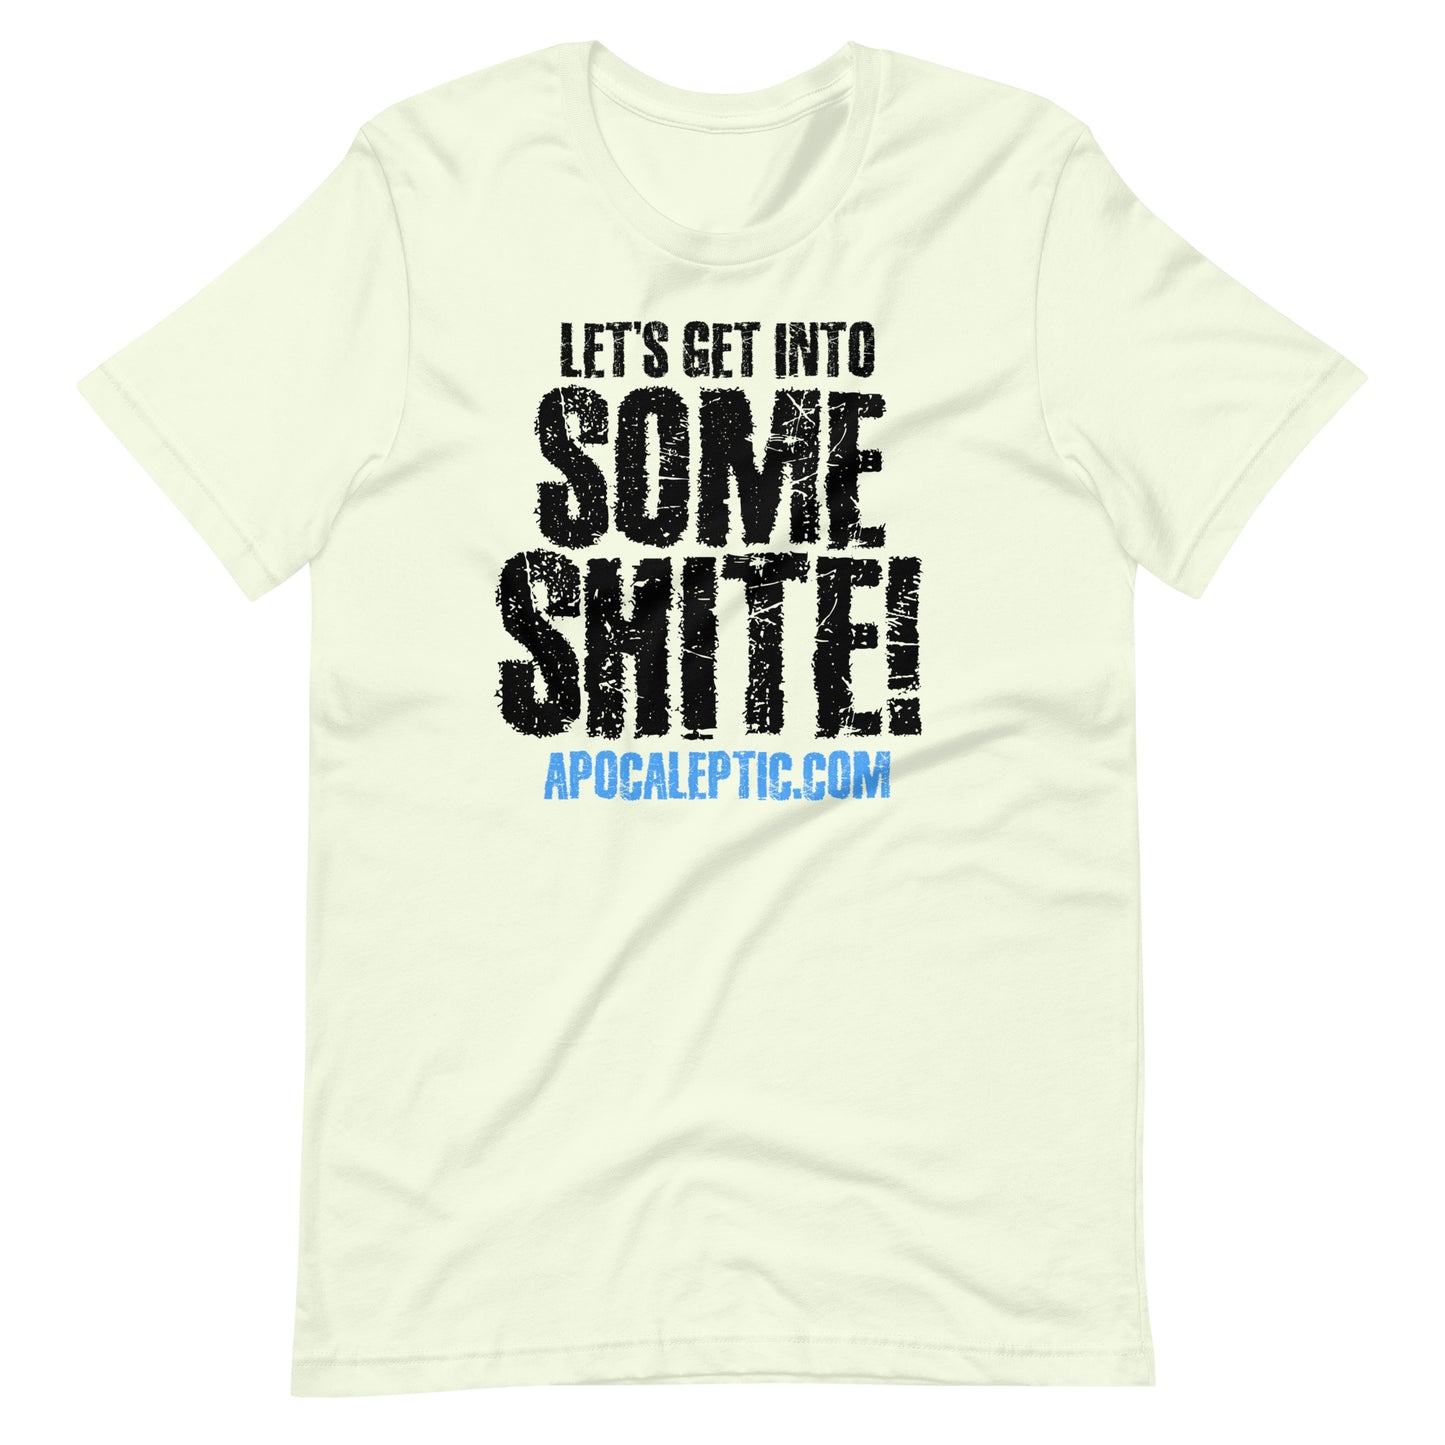 Apocaleptic Shite Shirt - Unisex Light Color T-shirt